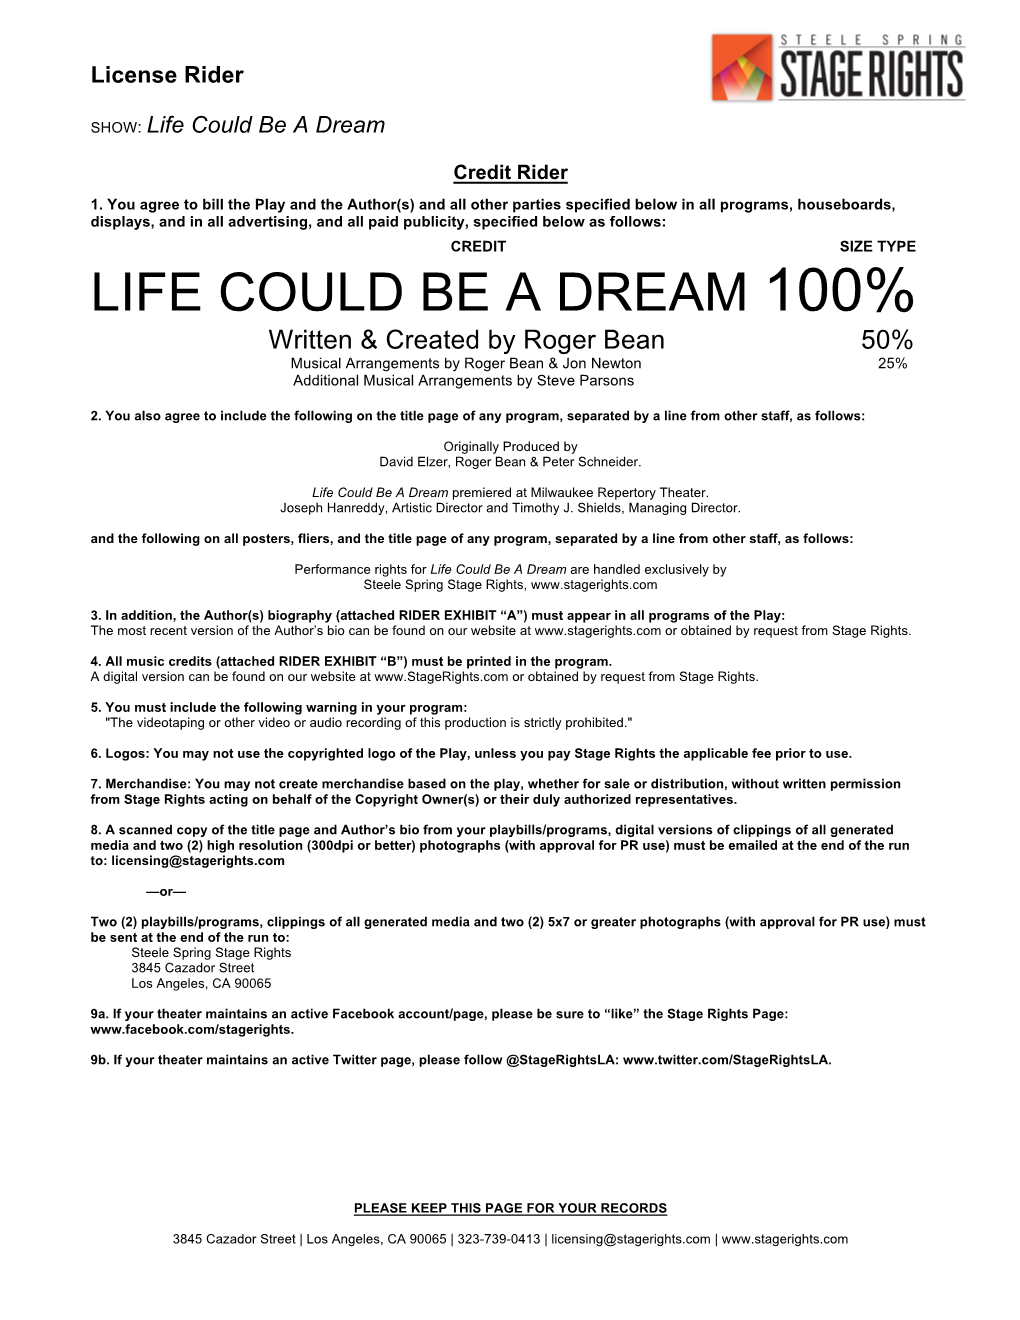 LIFE COULD BE a DREAM 100% Written & Created by Roger Bean 50% Musical Arrangements by Roger Bean & Jon Newton 25% Additional Musical Arrangements by Steve Parsons